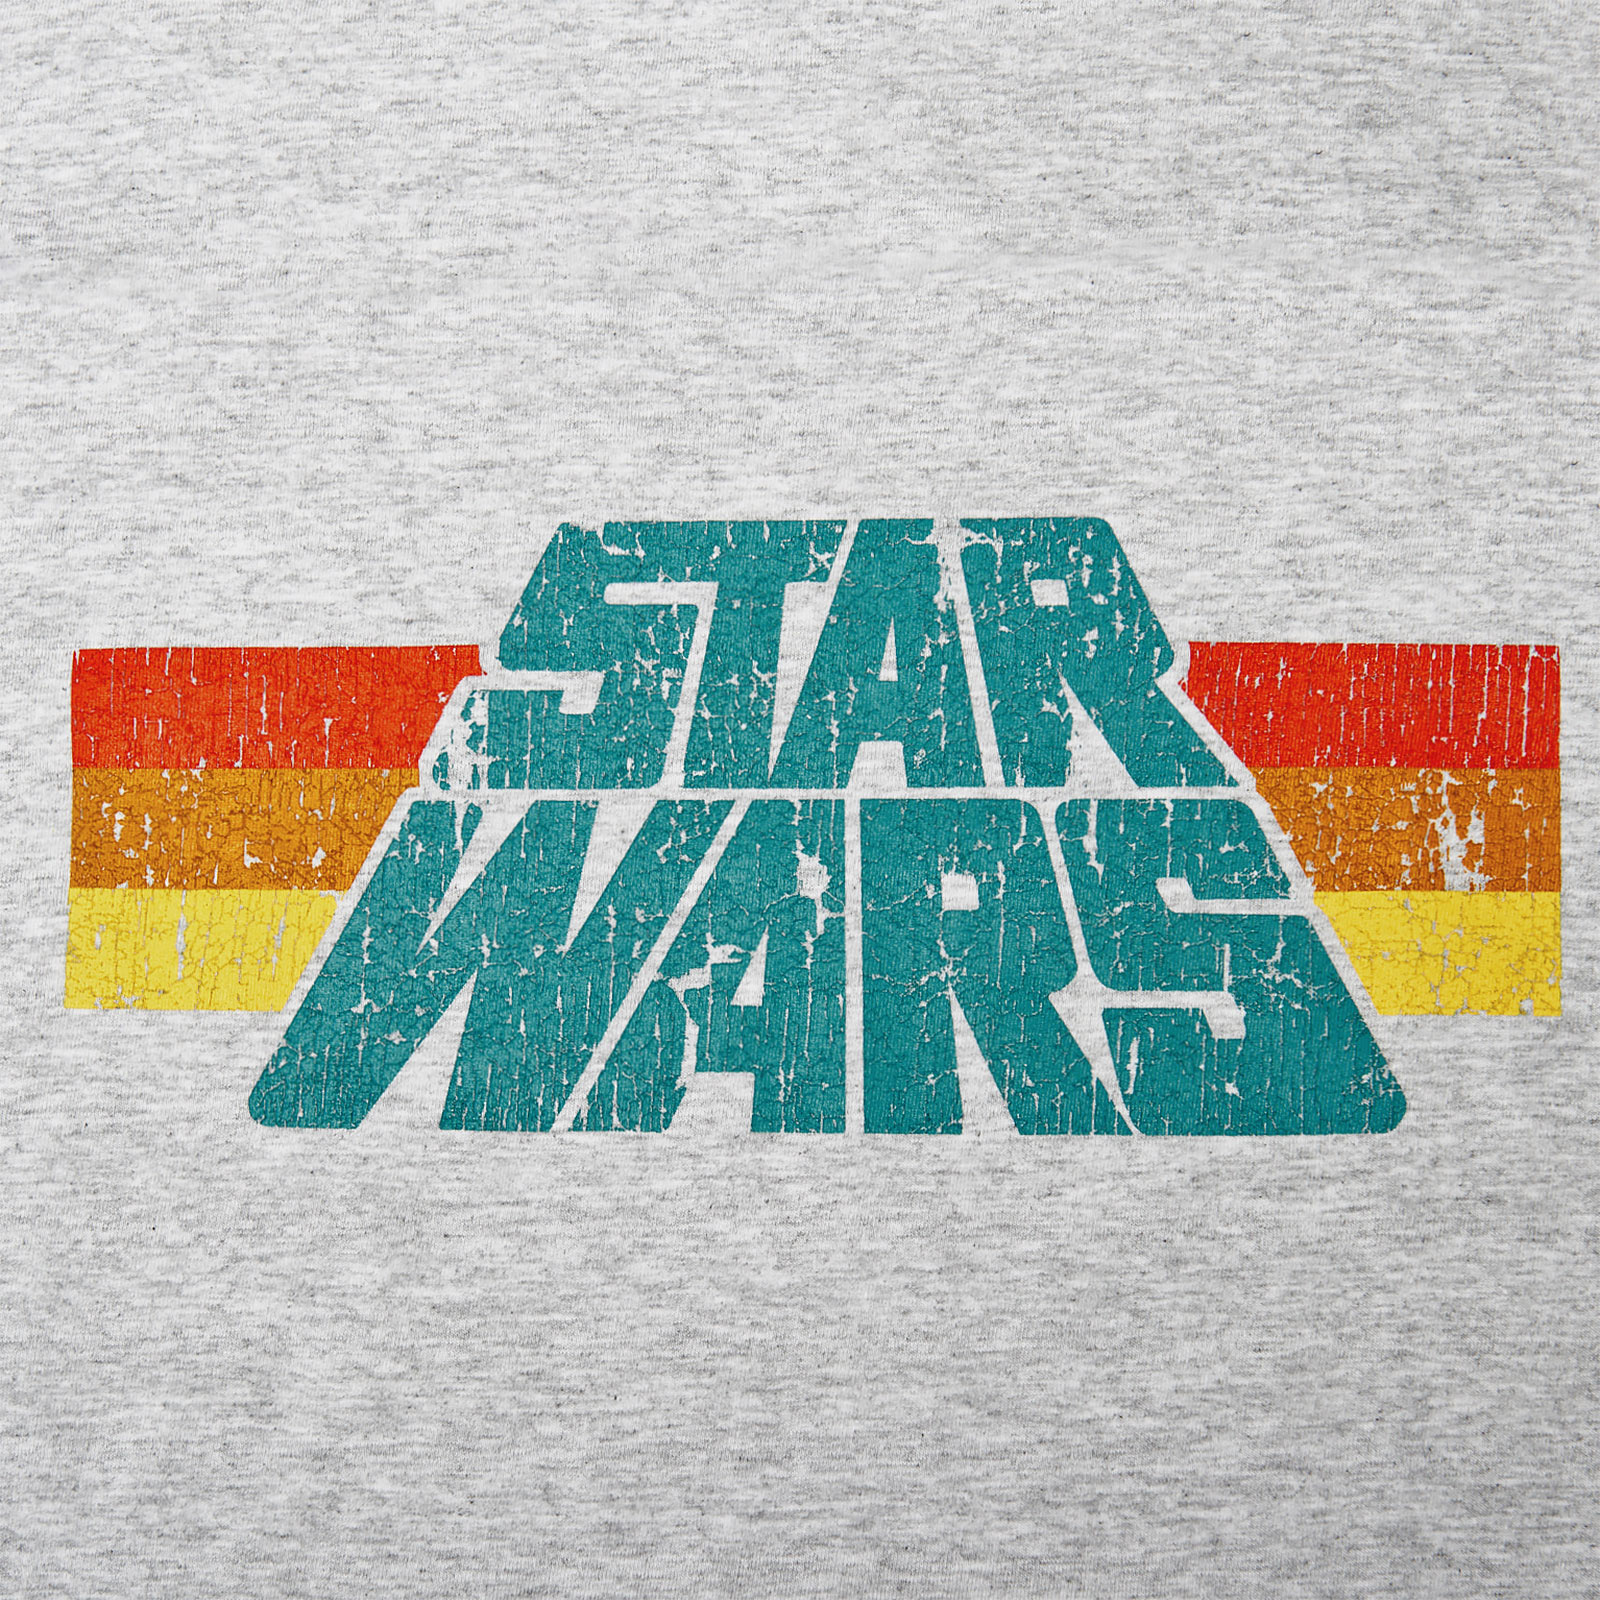 Star Wars - T-shirt Logo Vintage 77 Gris